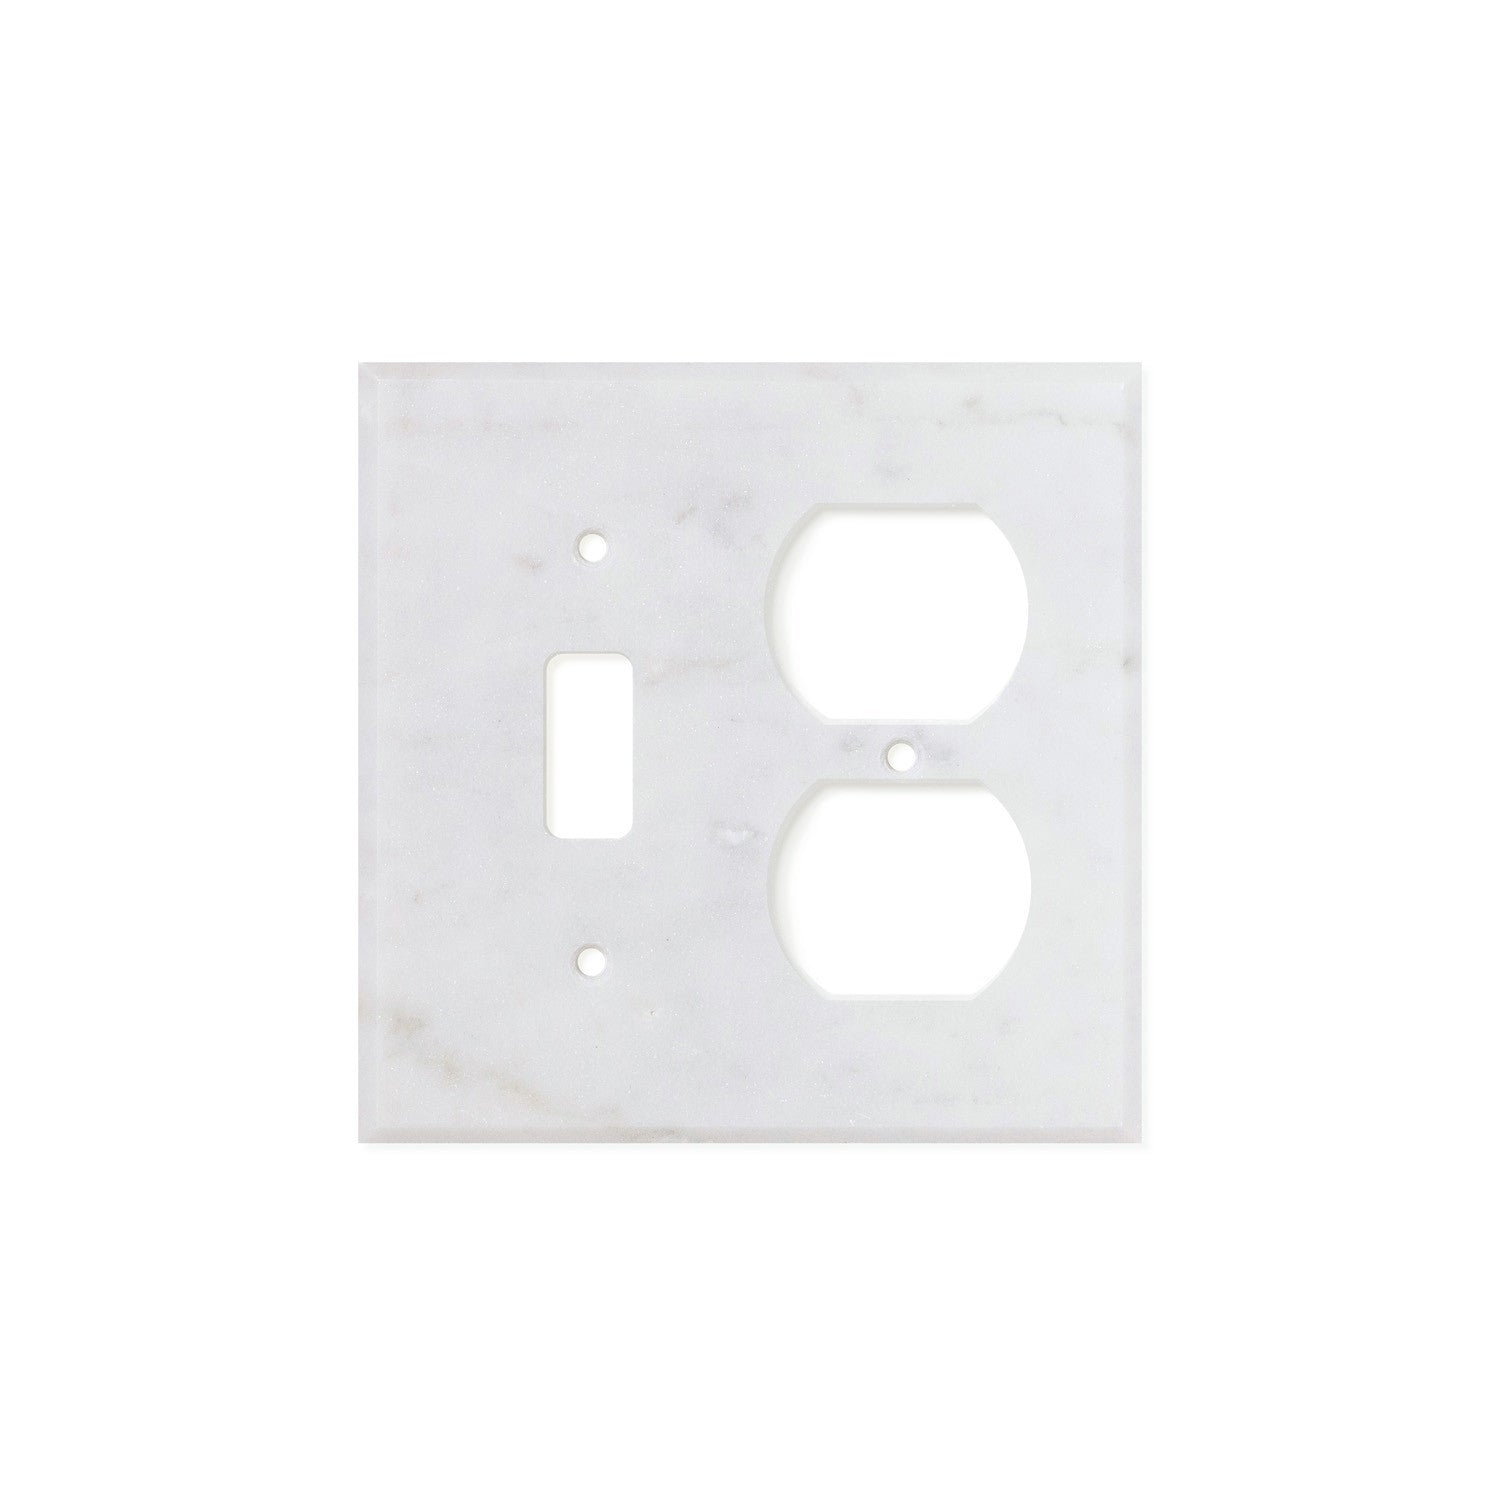 Bianco Carrara (Carrara White) Marble Switch Plate Cover, Polished (TOGGLE DUPLEX) - Tilephile